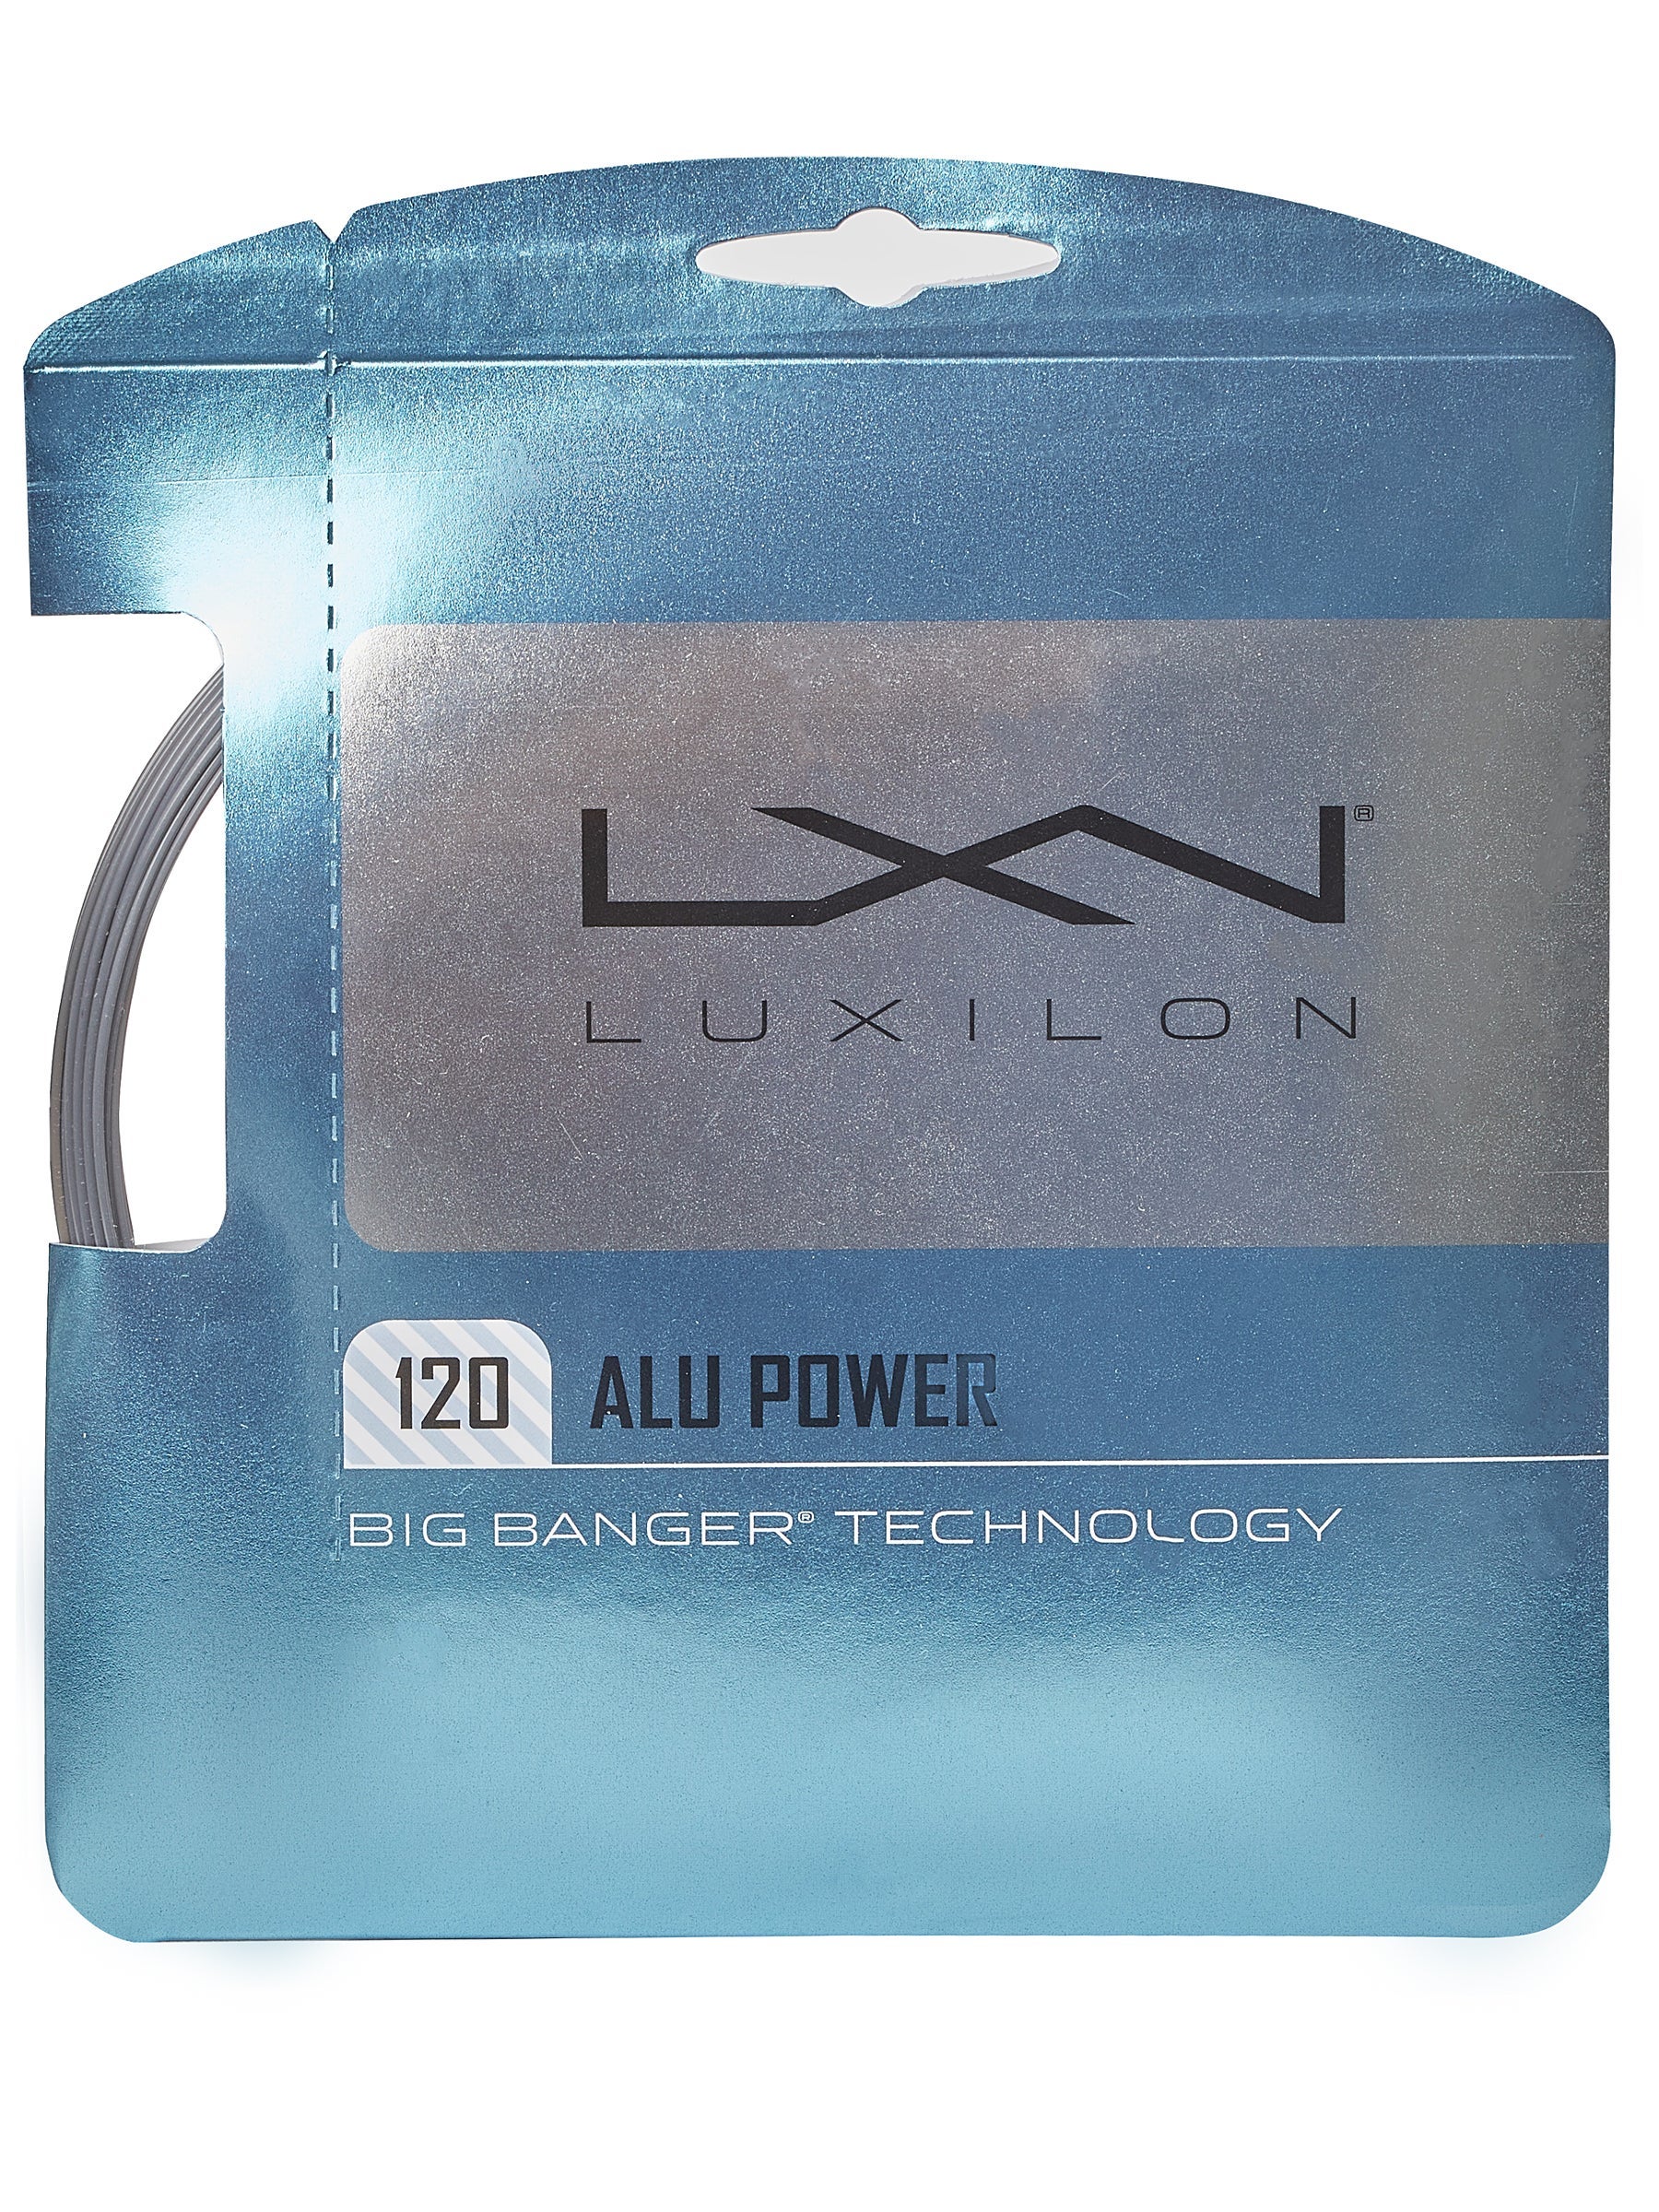 NEW Luxilon ALU POWER FEEL BIG BANGER 18 1.20 Tennis String Set SILVER Pack 